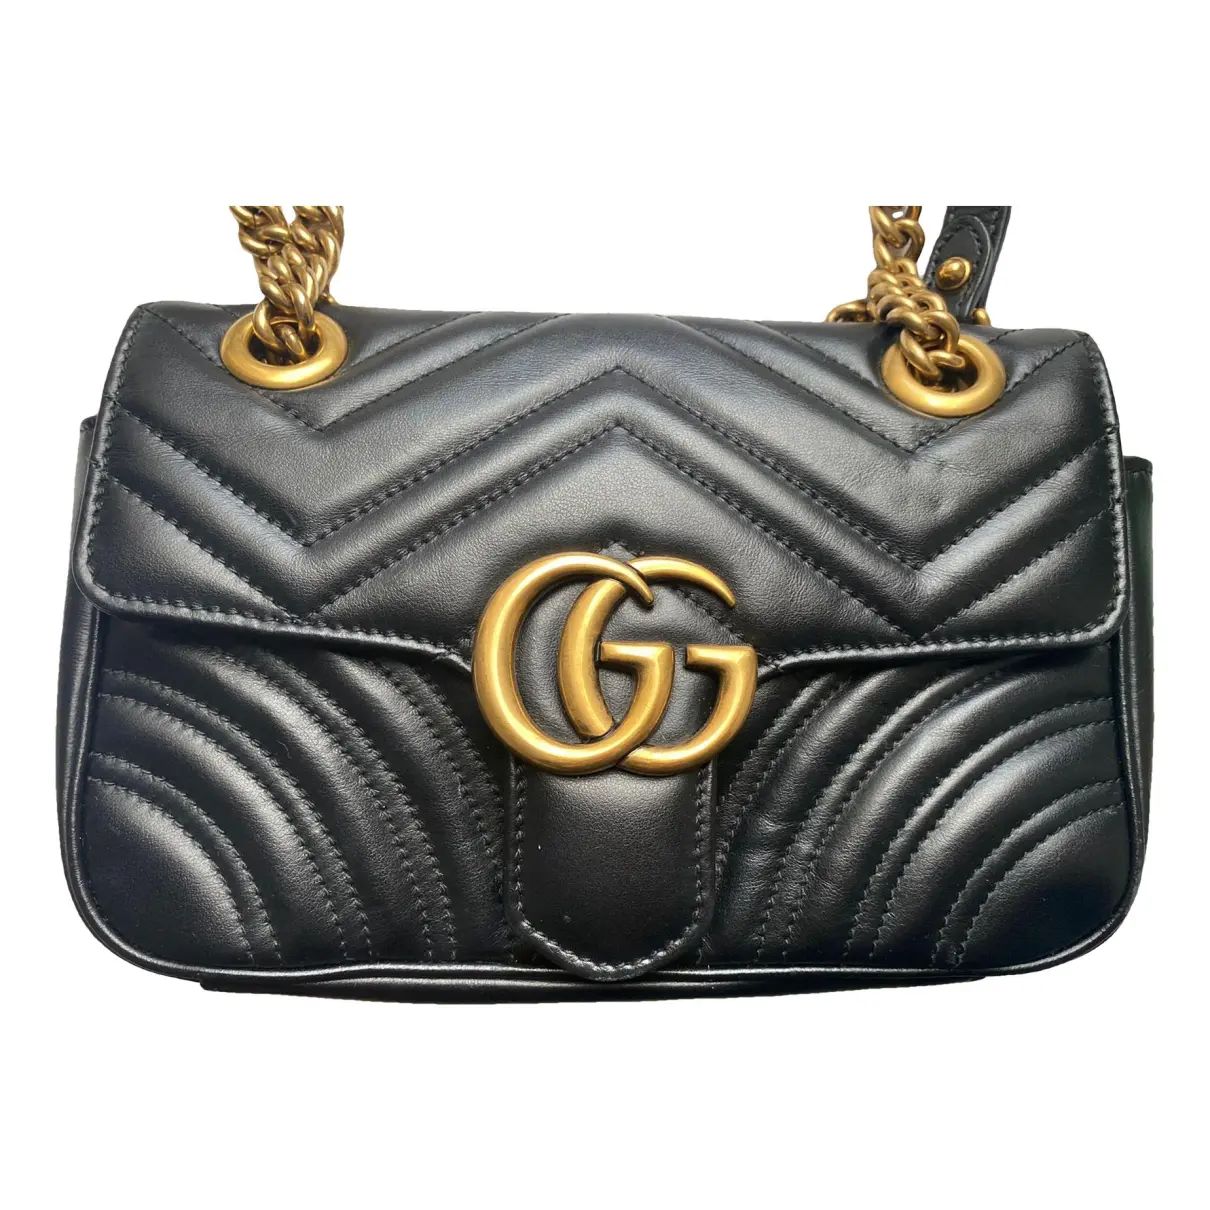 GG Marmont Flap leather handbag